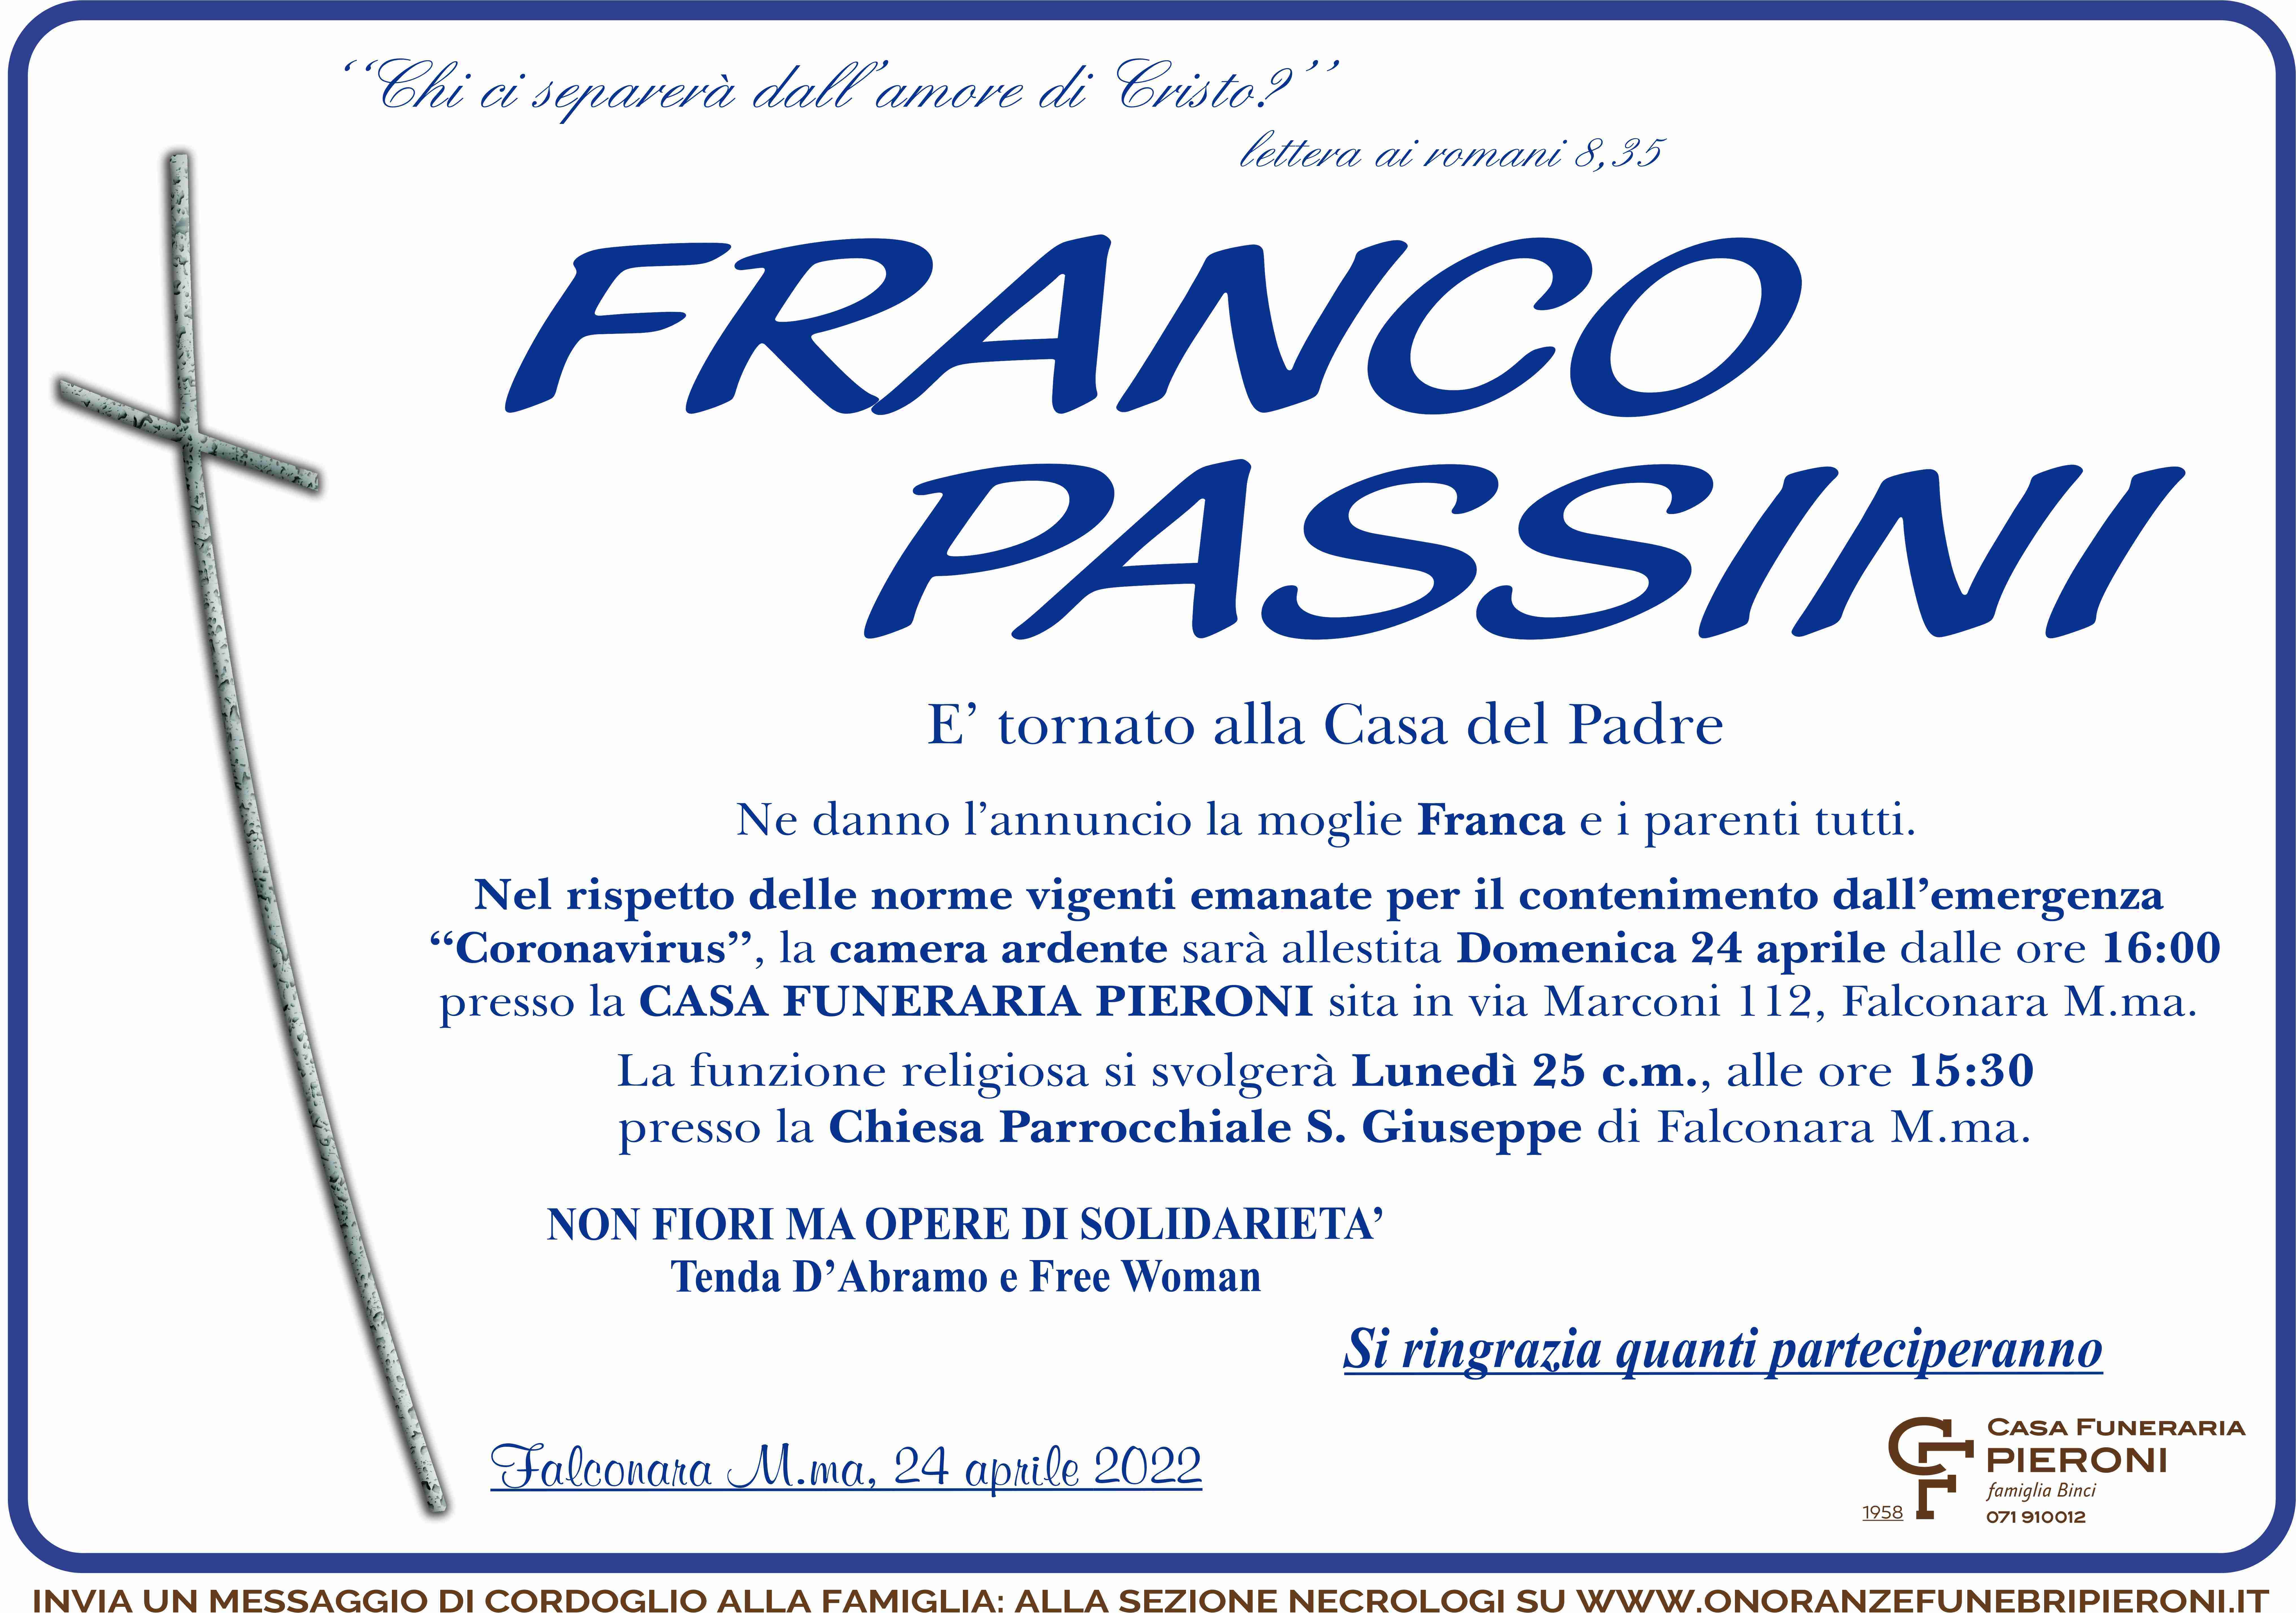 Franco Passini